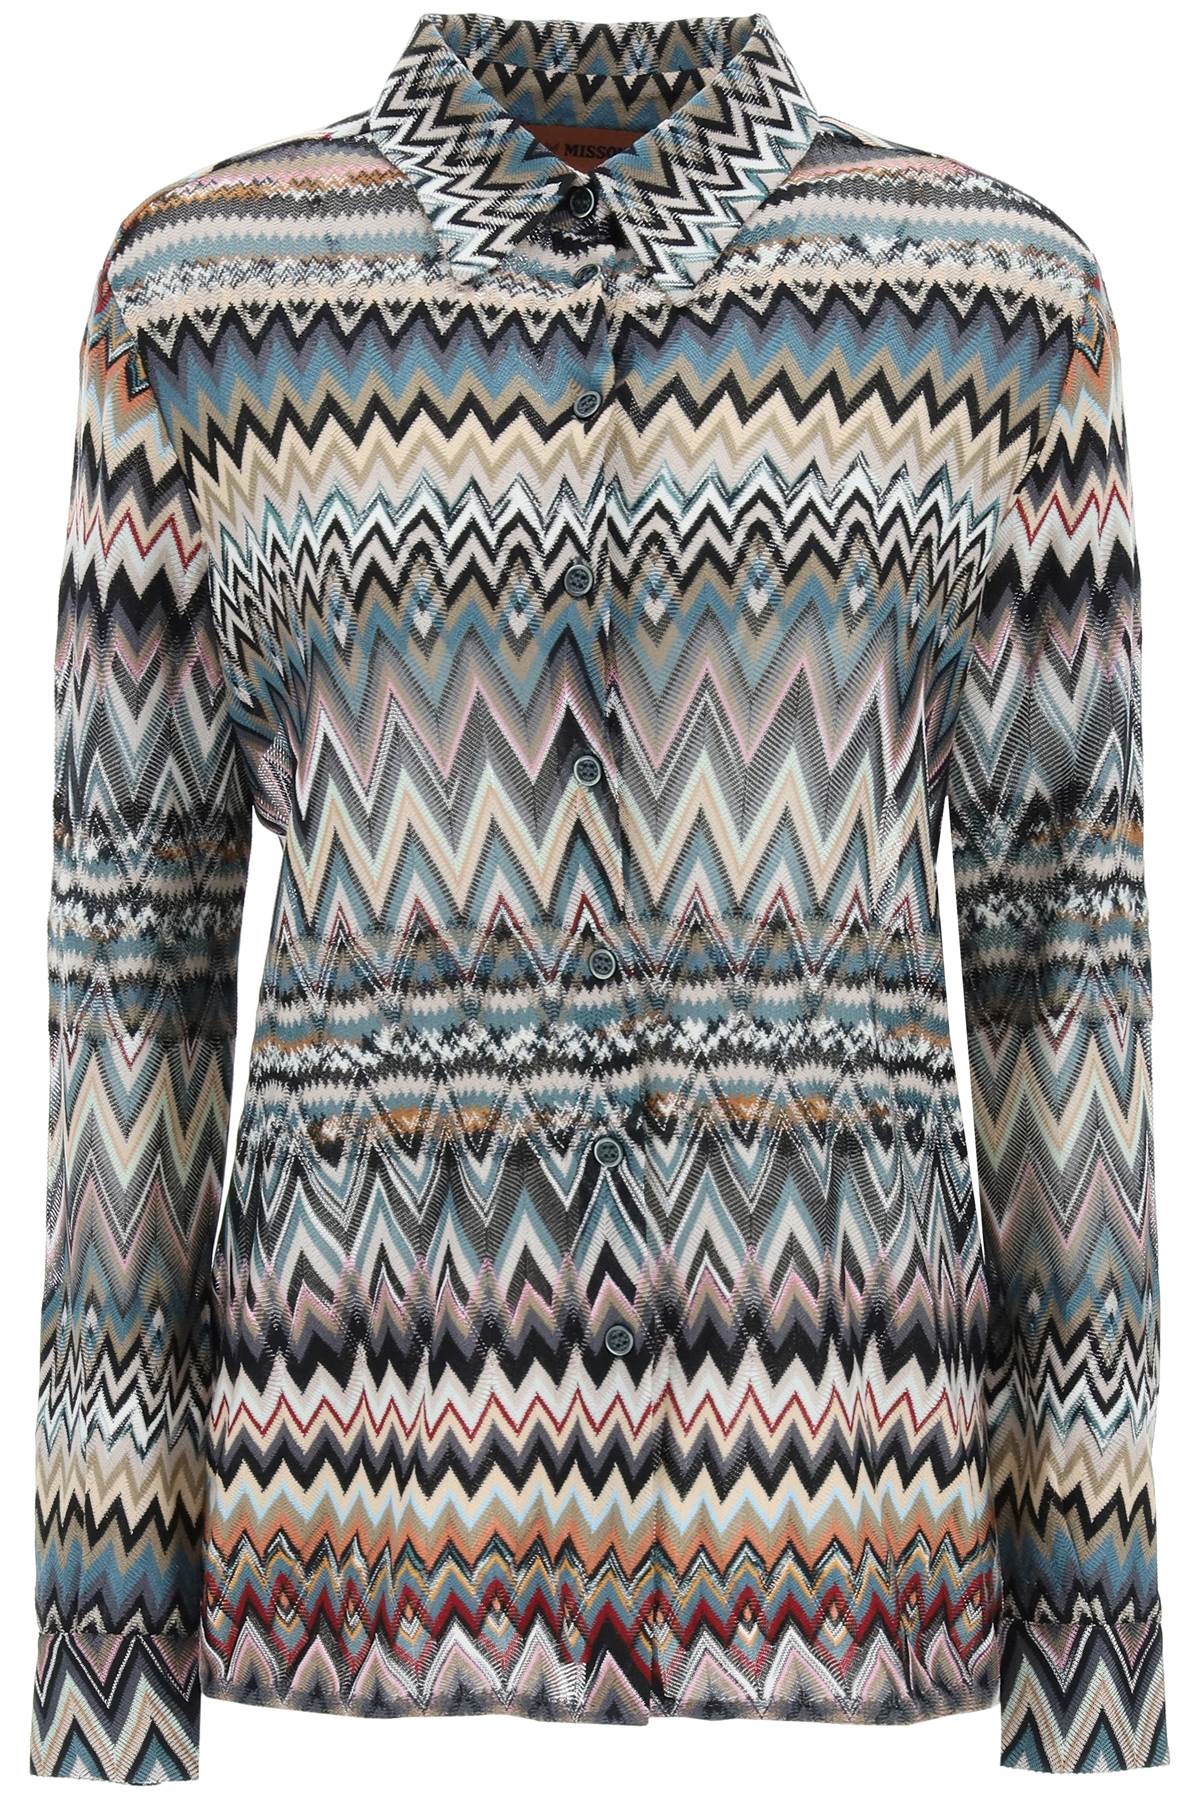 Missoni Semi-sheer Knit Shirt With Chevron Pattern